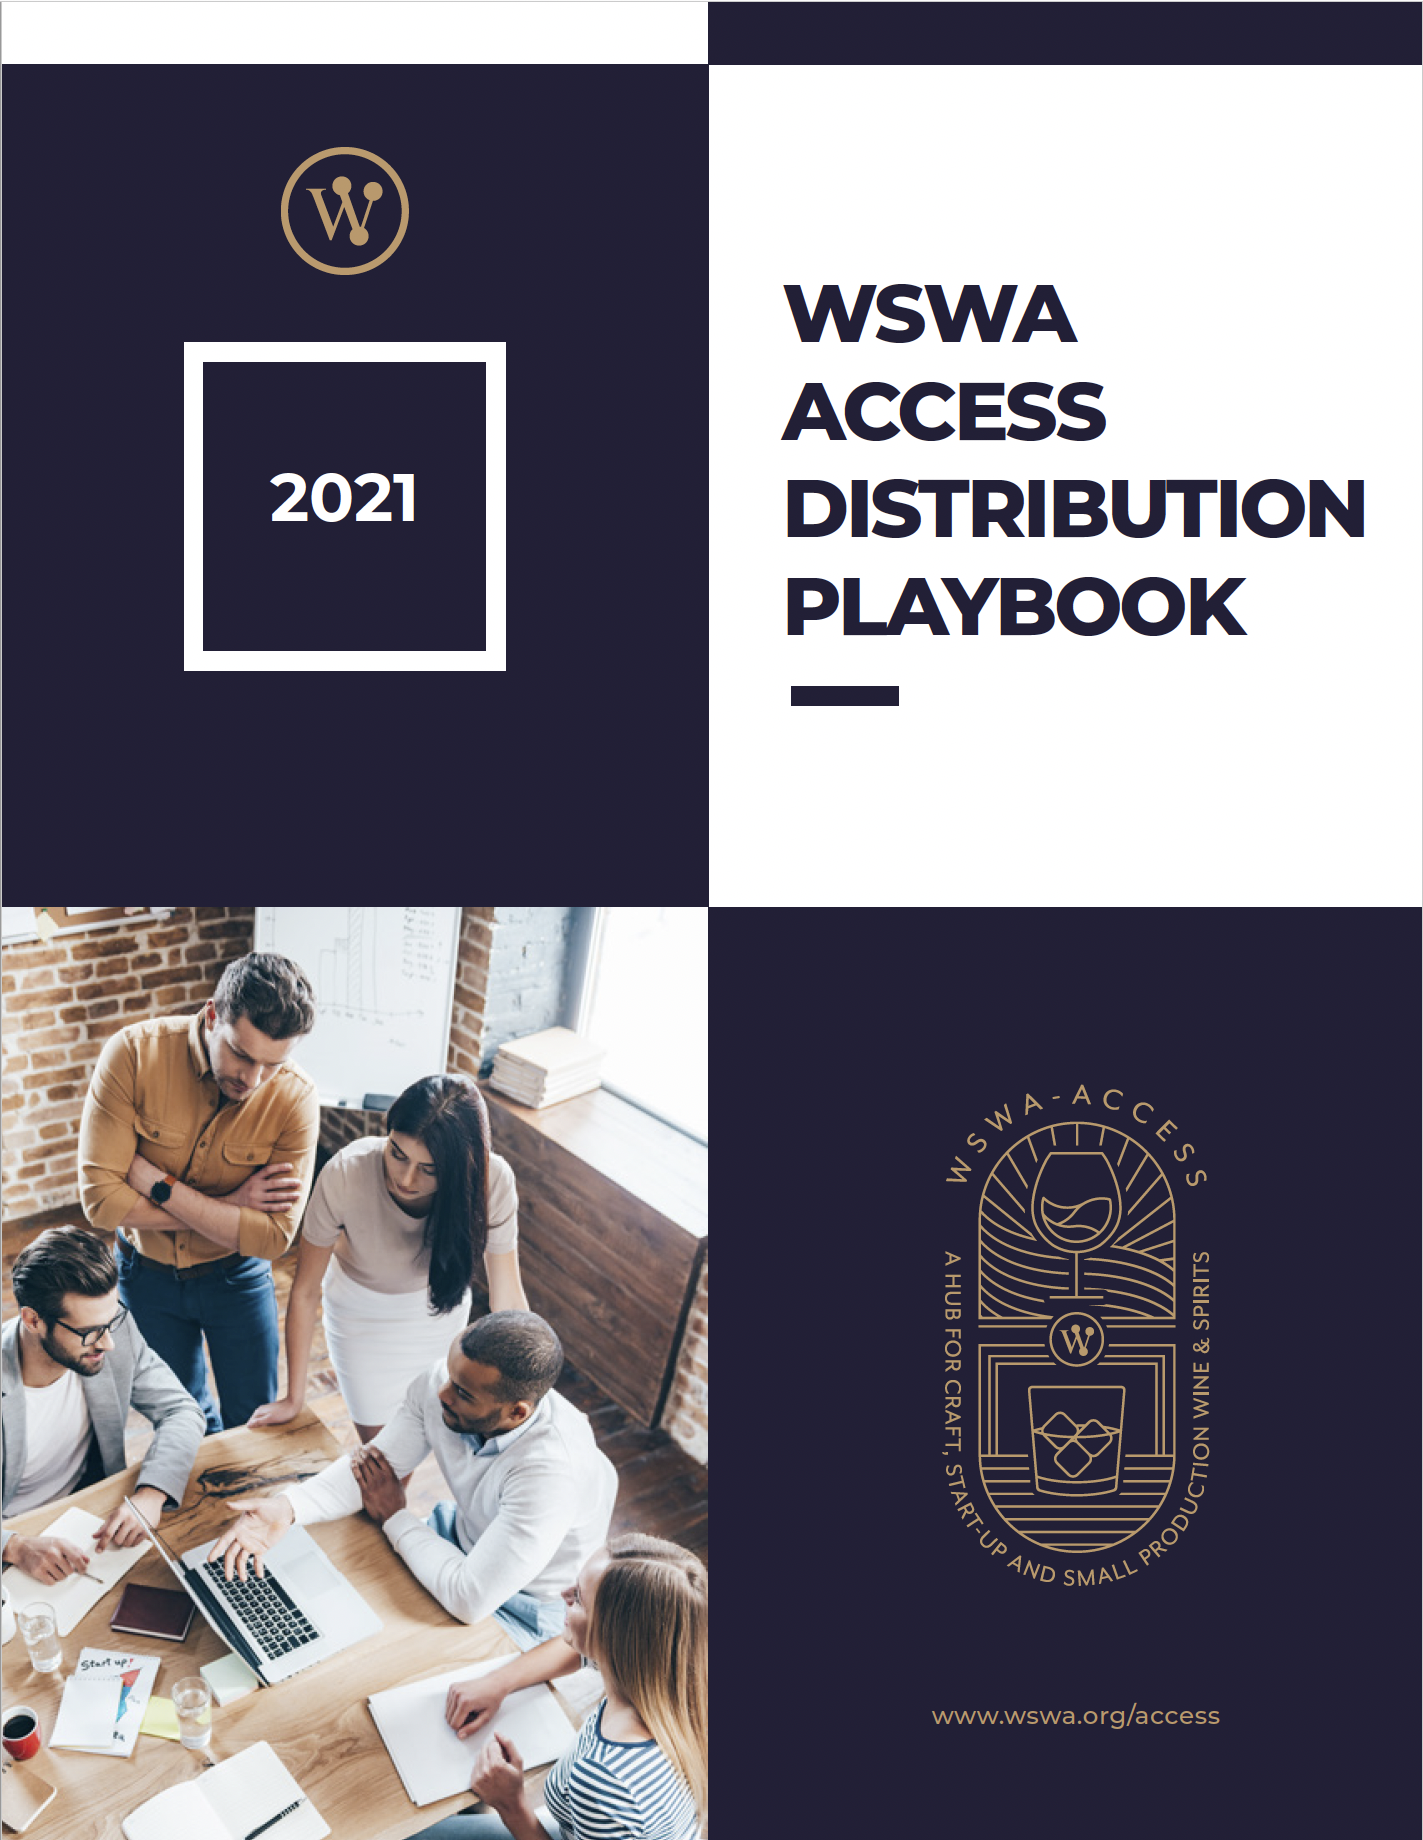 WSWA Access Distribution Playbook